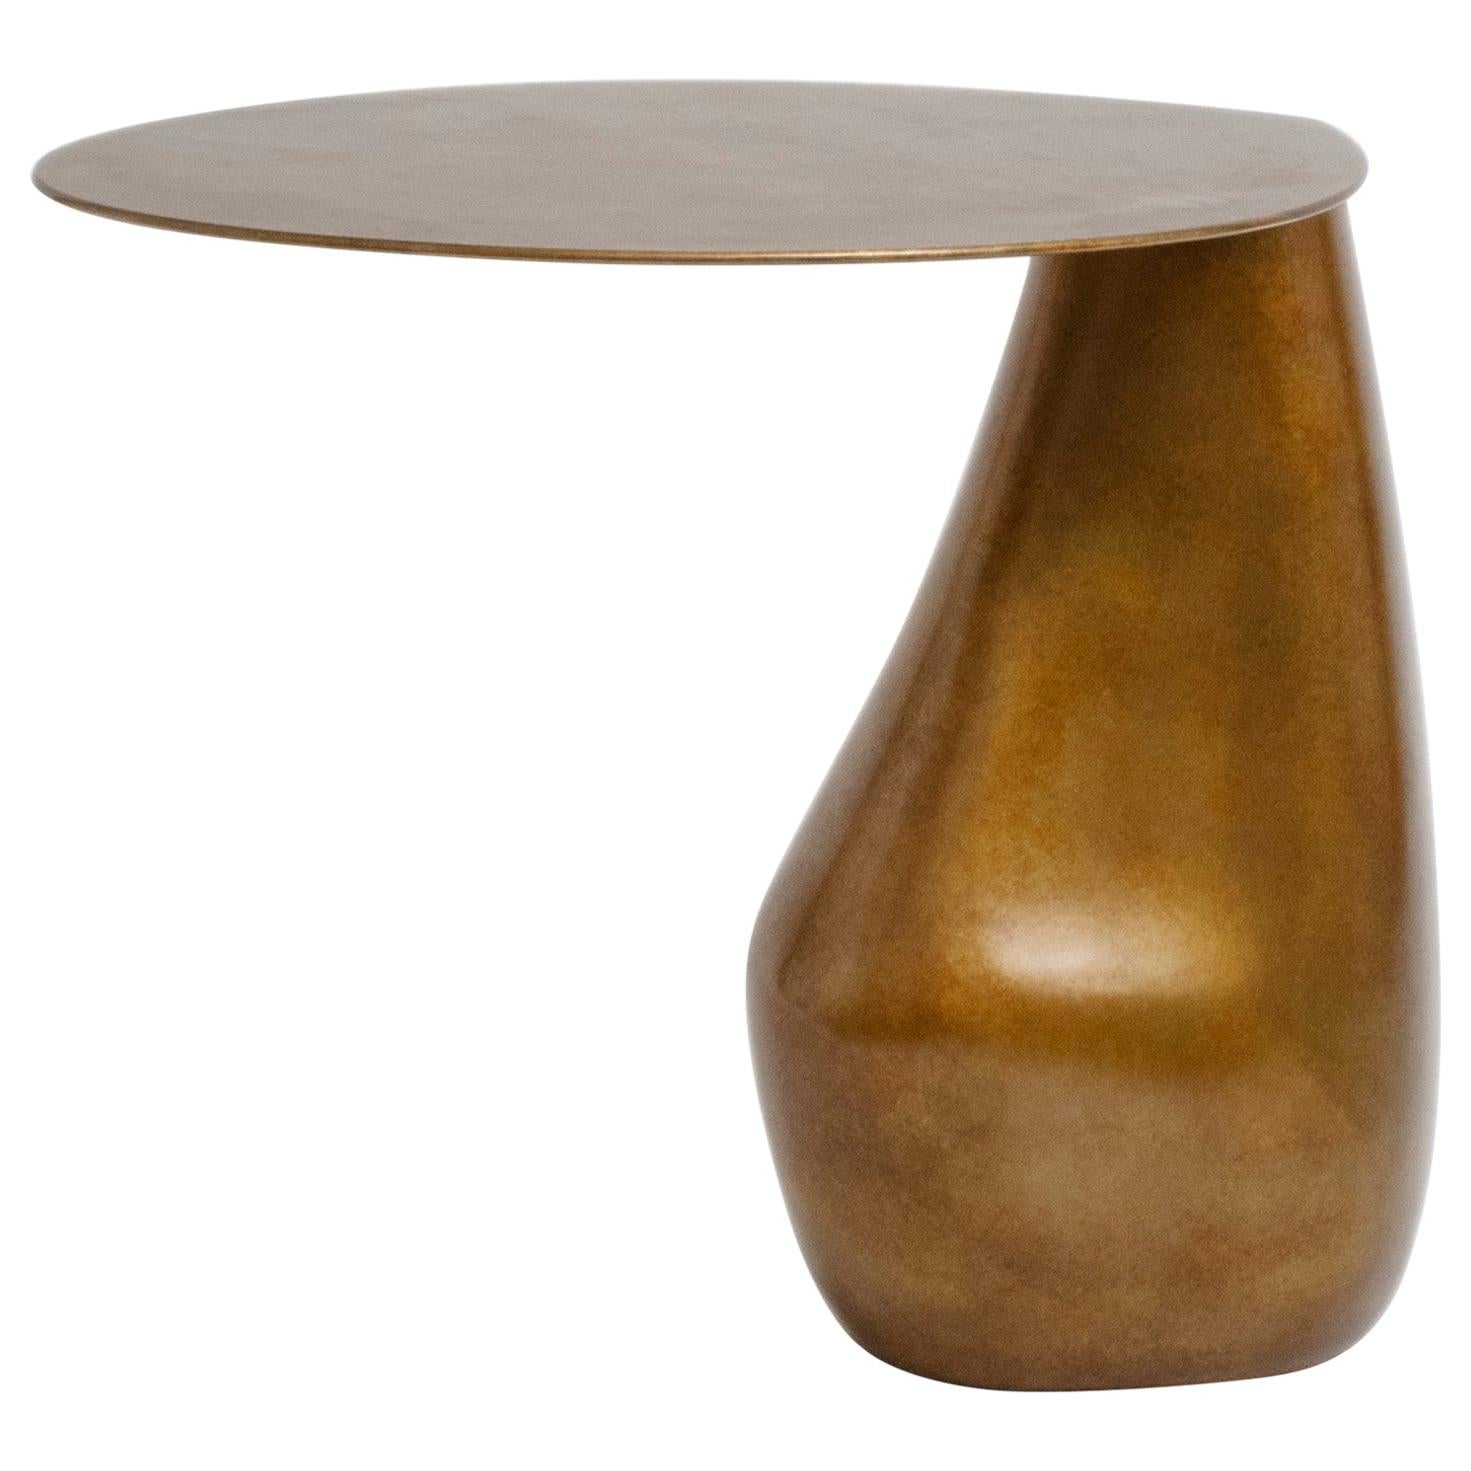 Konekt Dionis Side Table in Hand-Patina Bronze